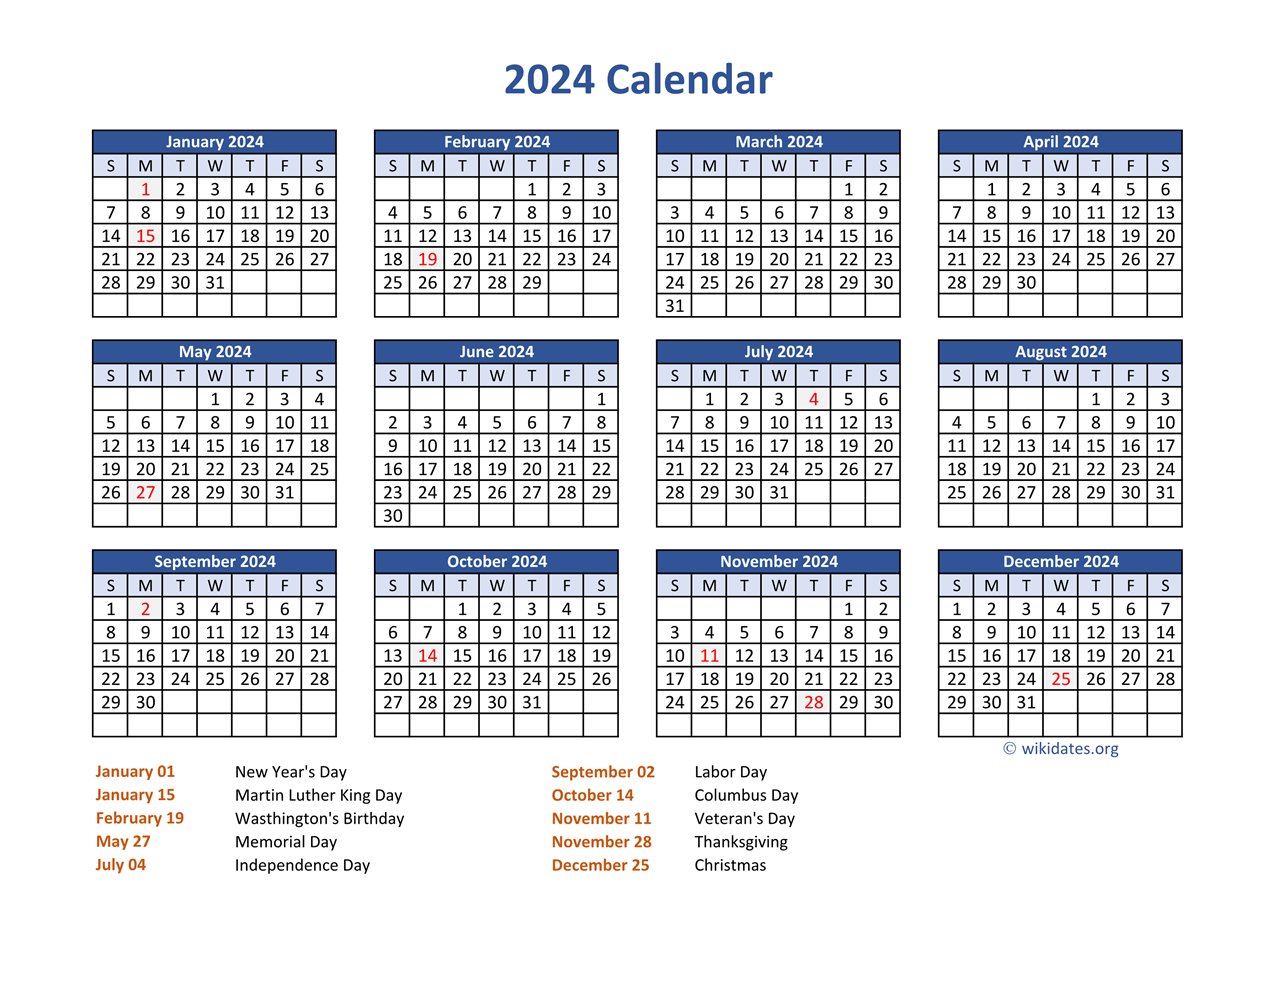 Pdf Calendar 2024 With Federal Holidays | Wikidates for Free Printable 2024-2024 Calendar